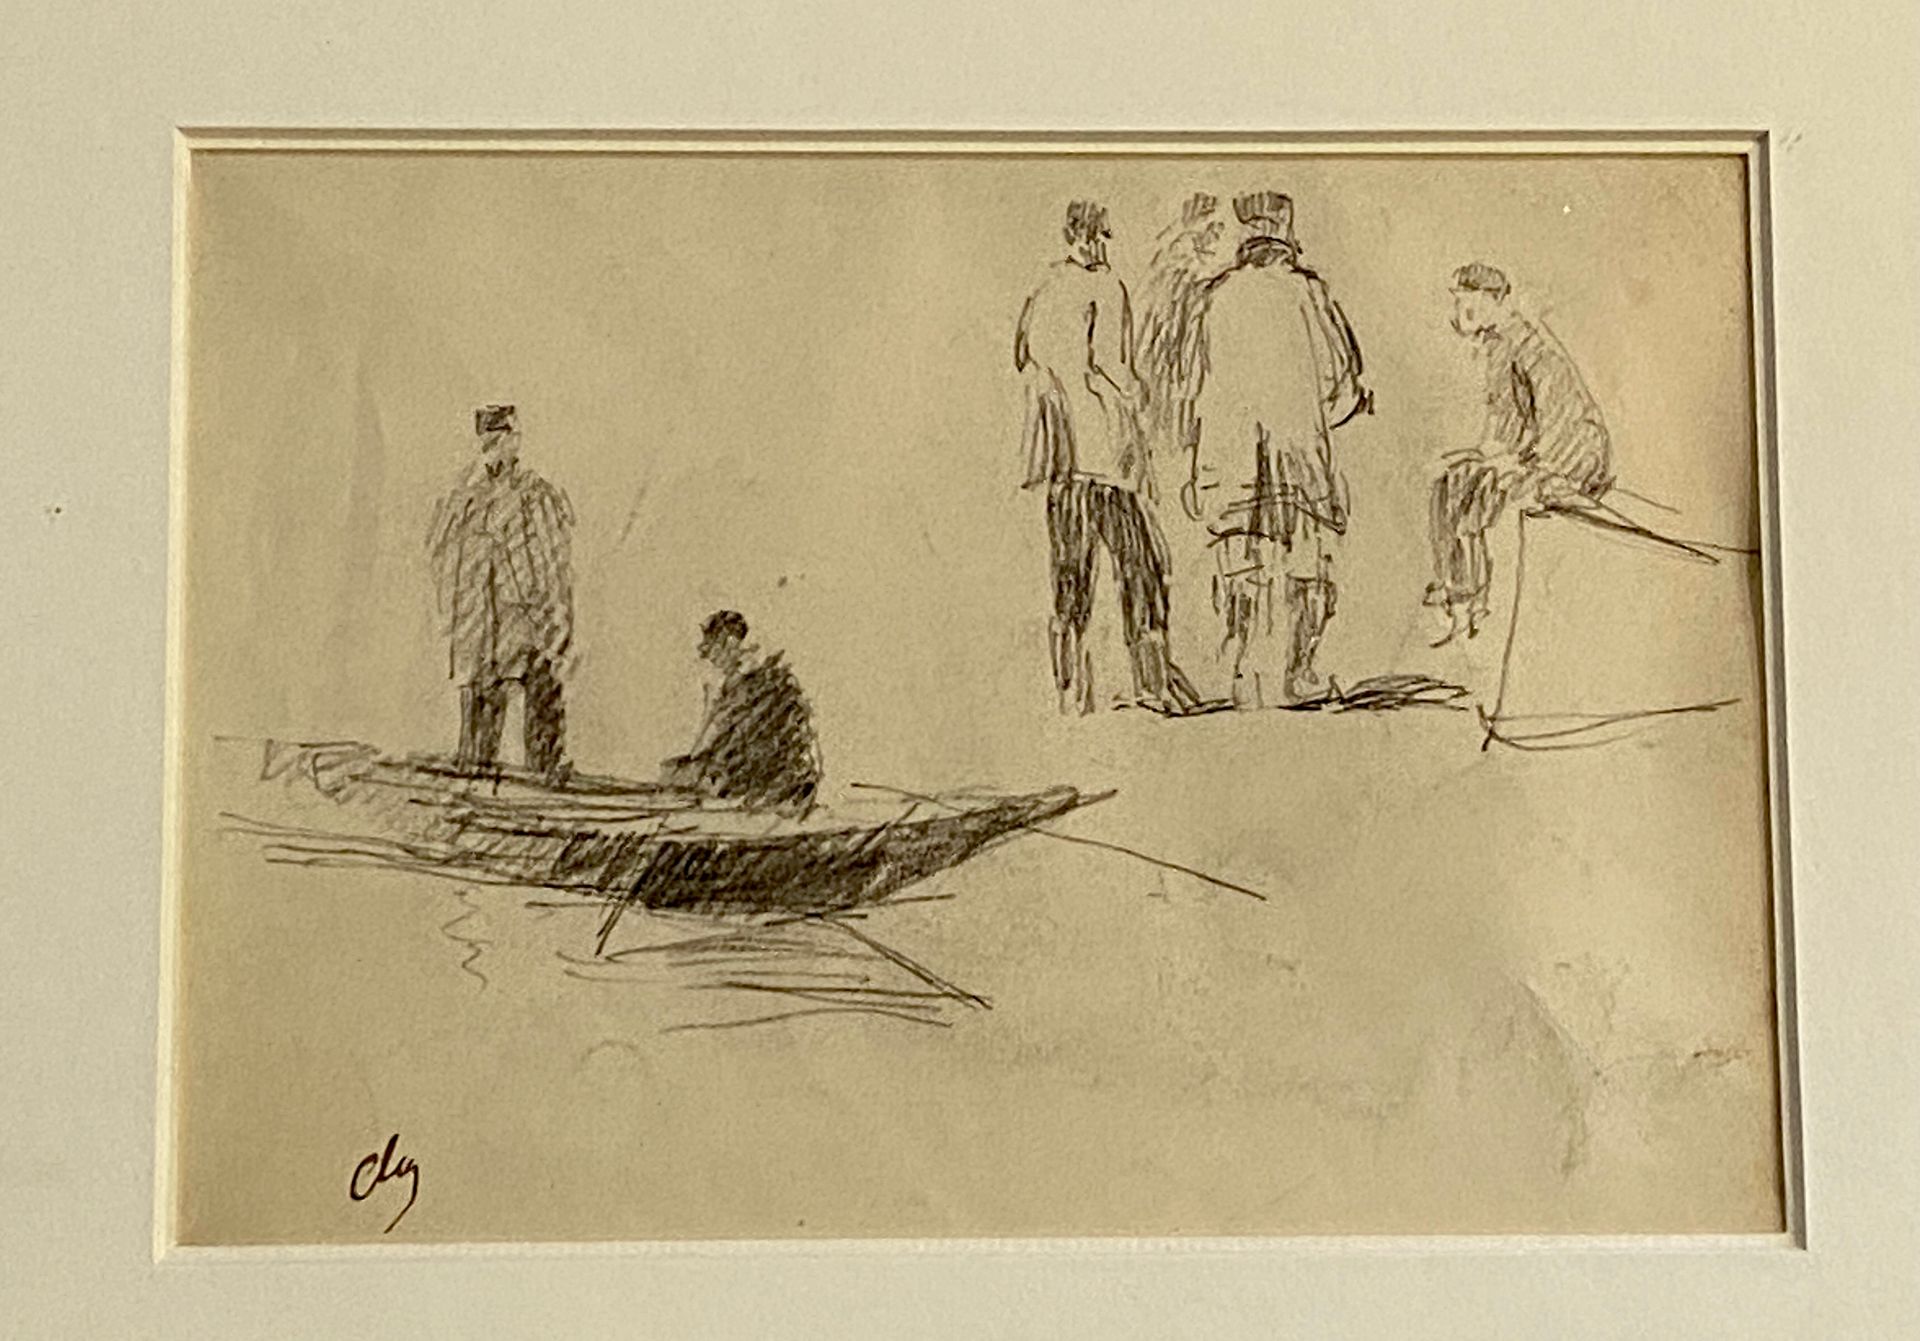 Null 阿尔贝-玛丽-勒布尔(1849-1928)

男子在船上，在后面的数字研究

石墨画，双面画，另一面是单字和印章。

尺寸：12,5 x 18厘米